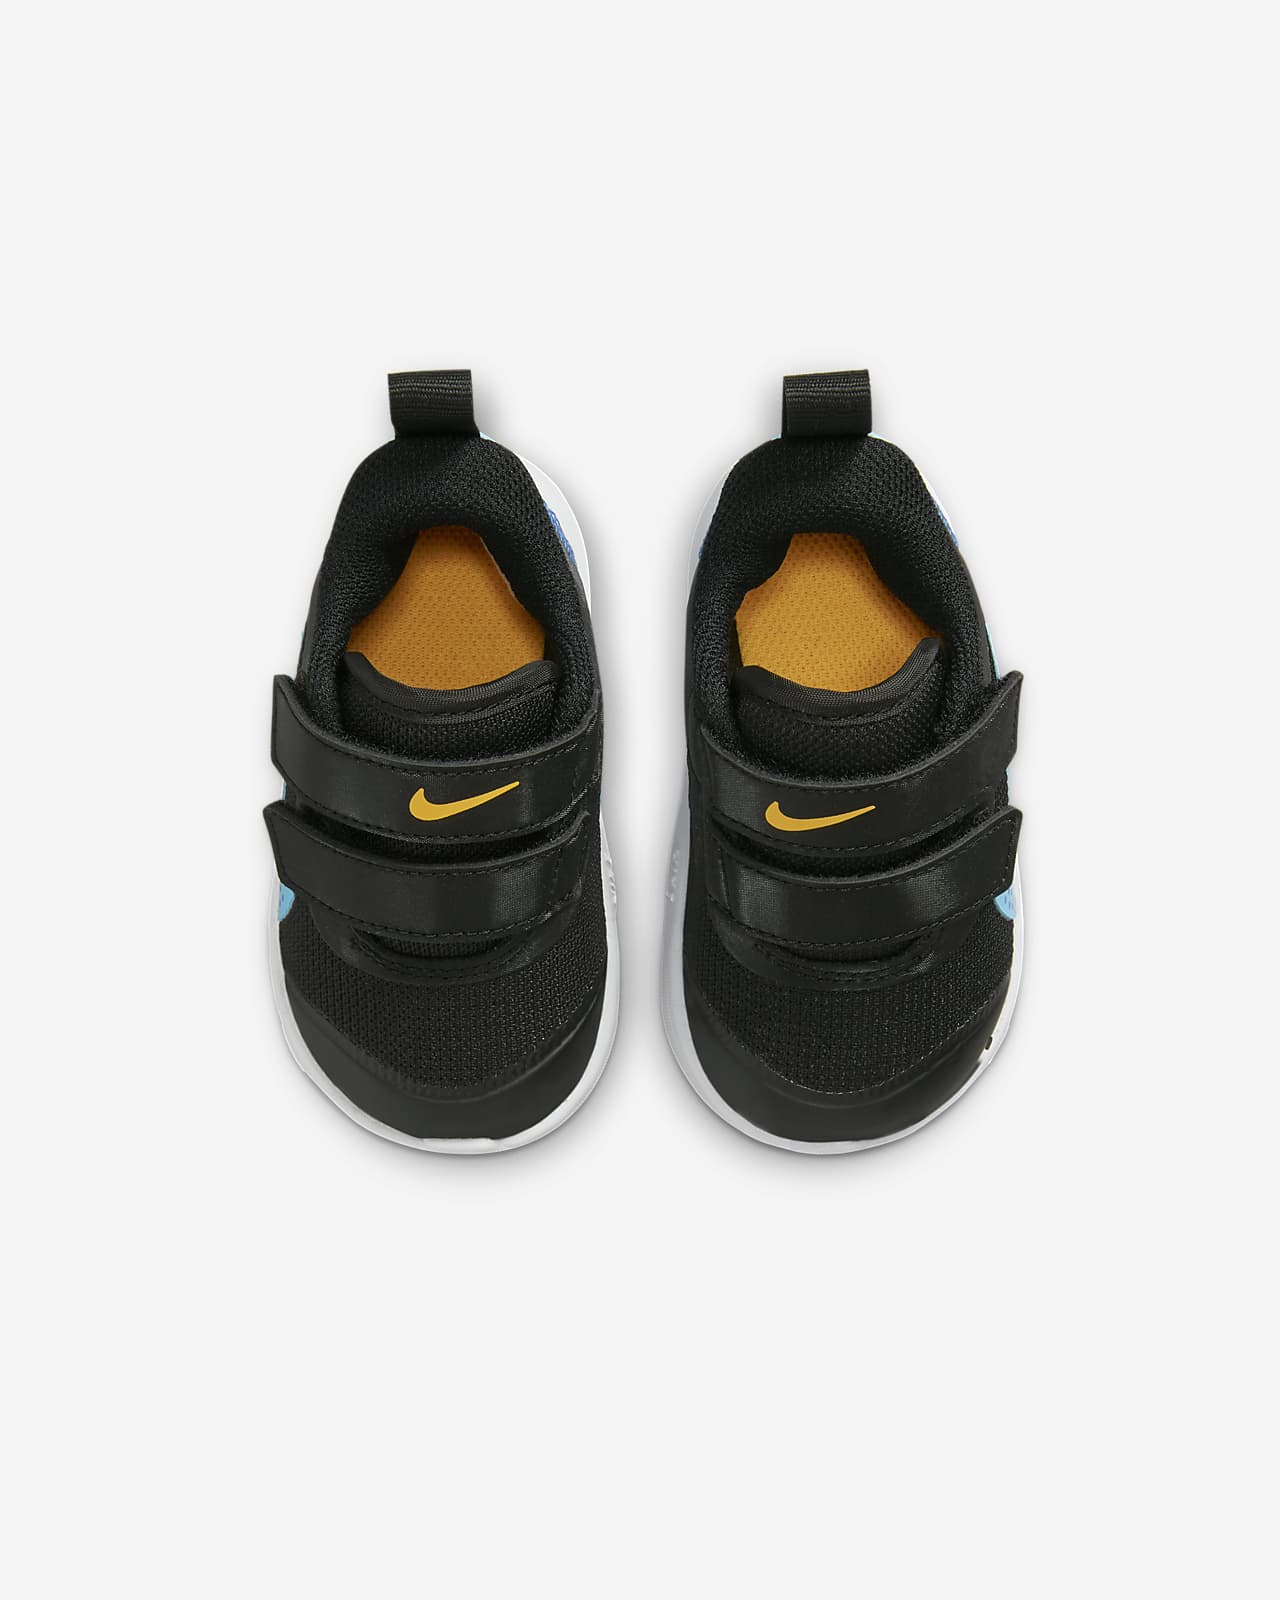 Omni ID Nike Shoes. Baby/Toddler Nike Multi-Court